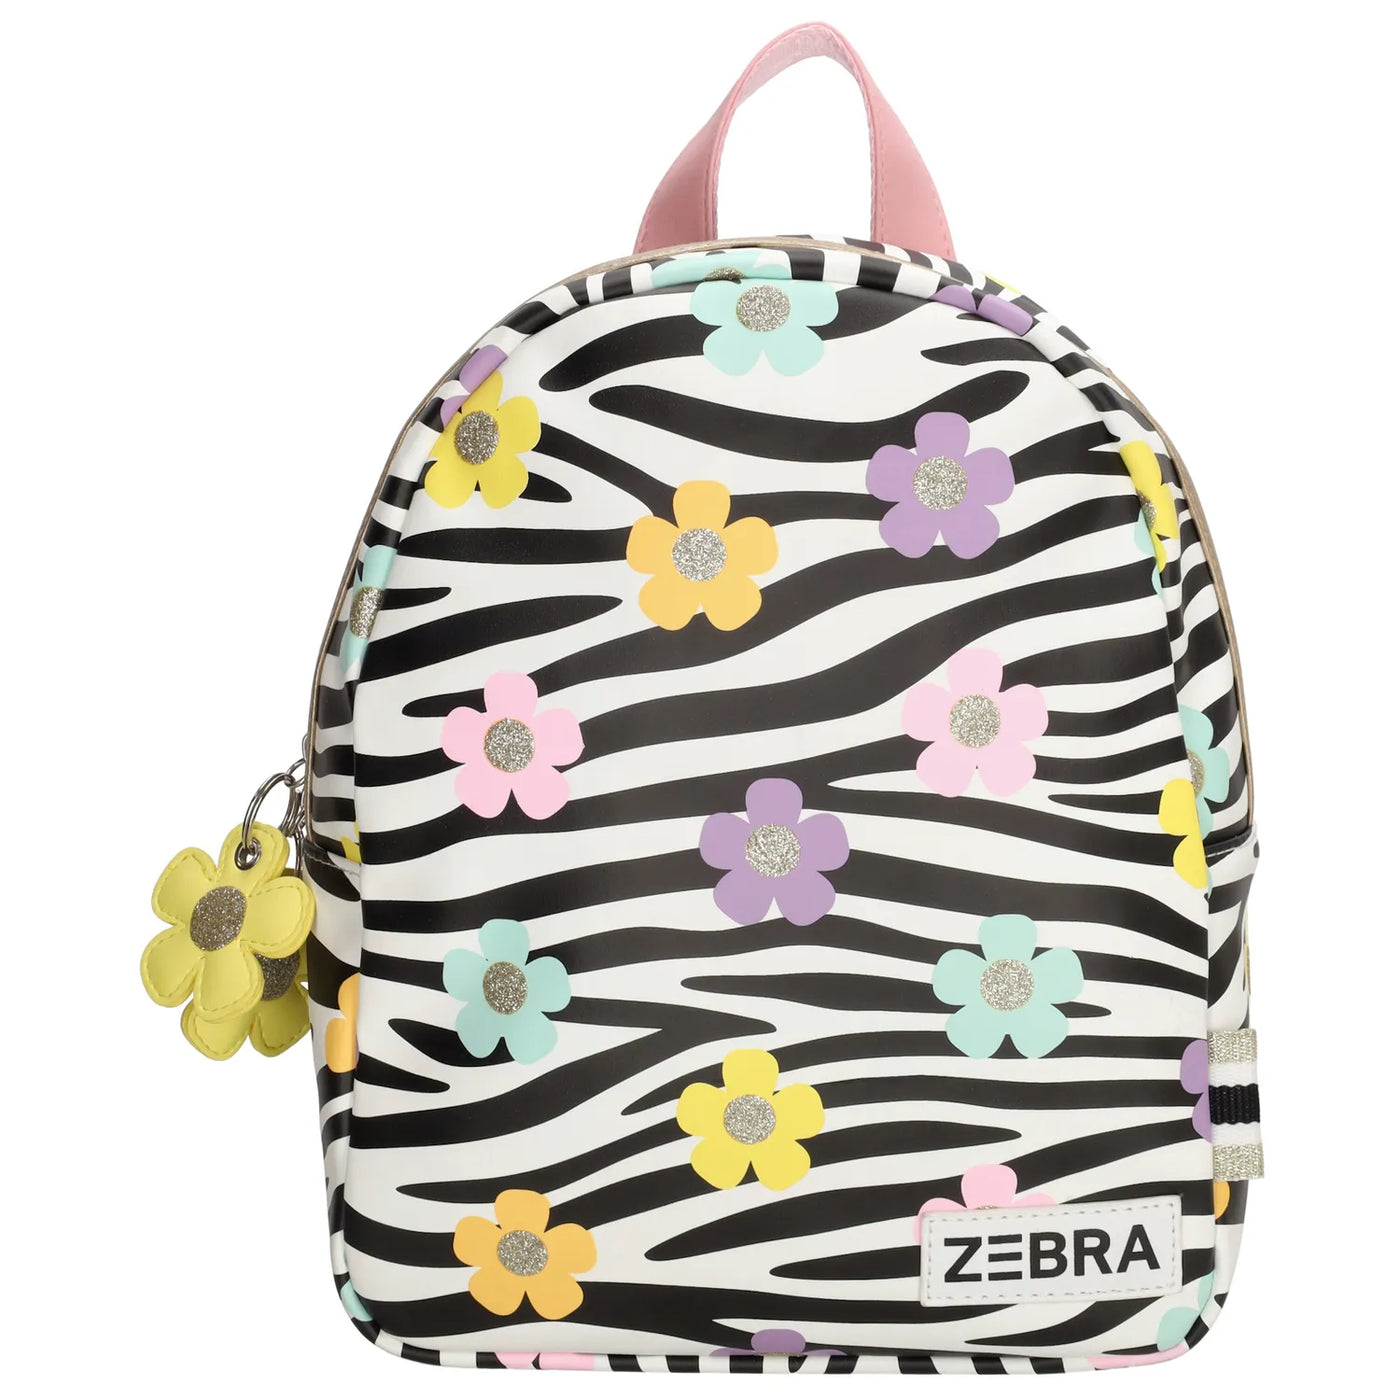 Zebra girls rugzak limited edition - pleun 21226195 (S)